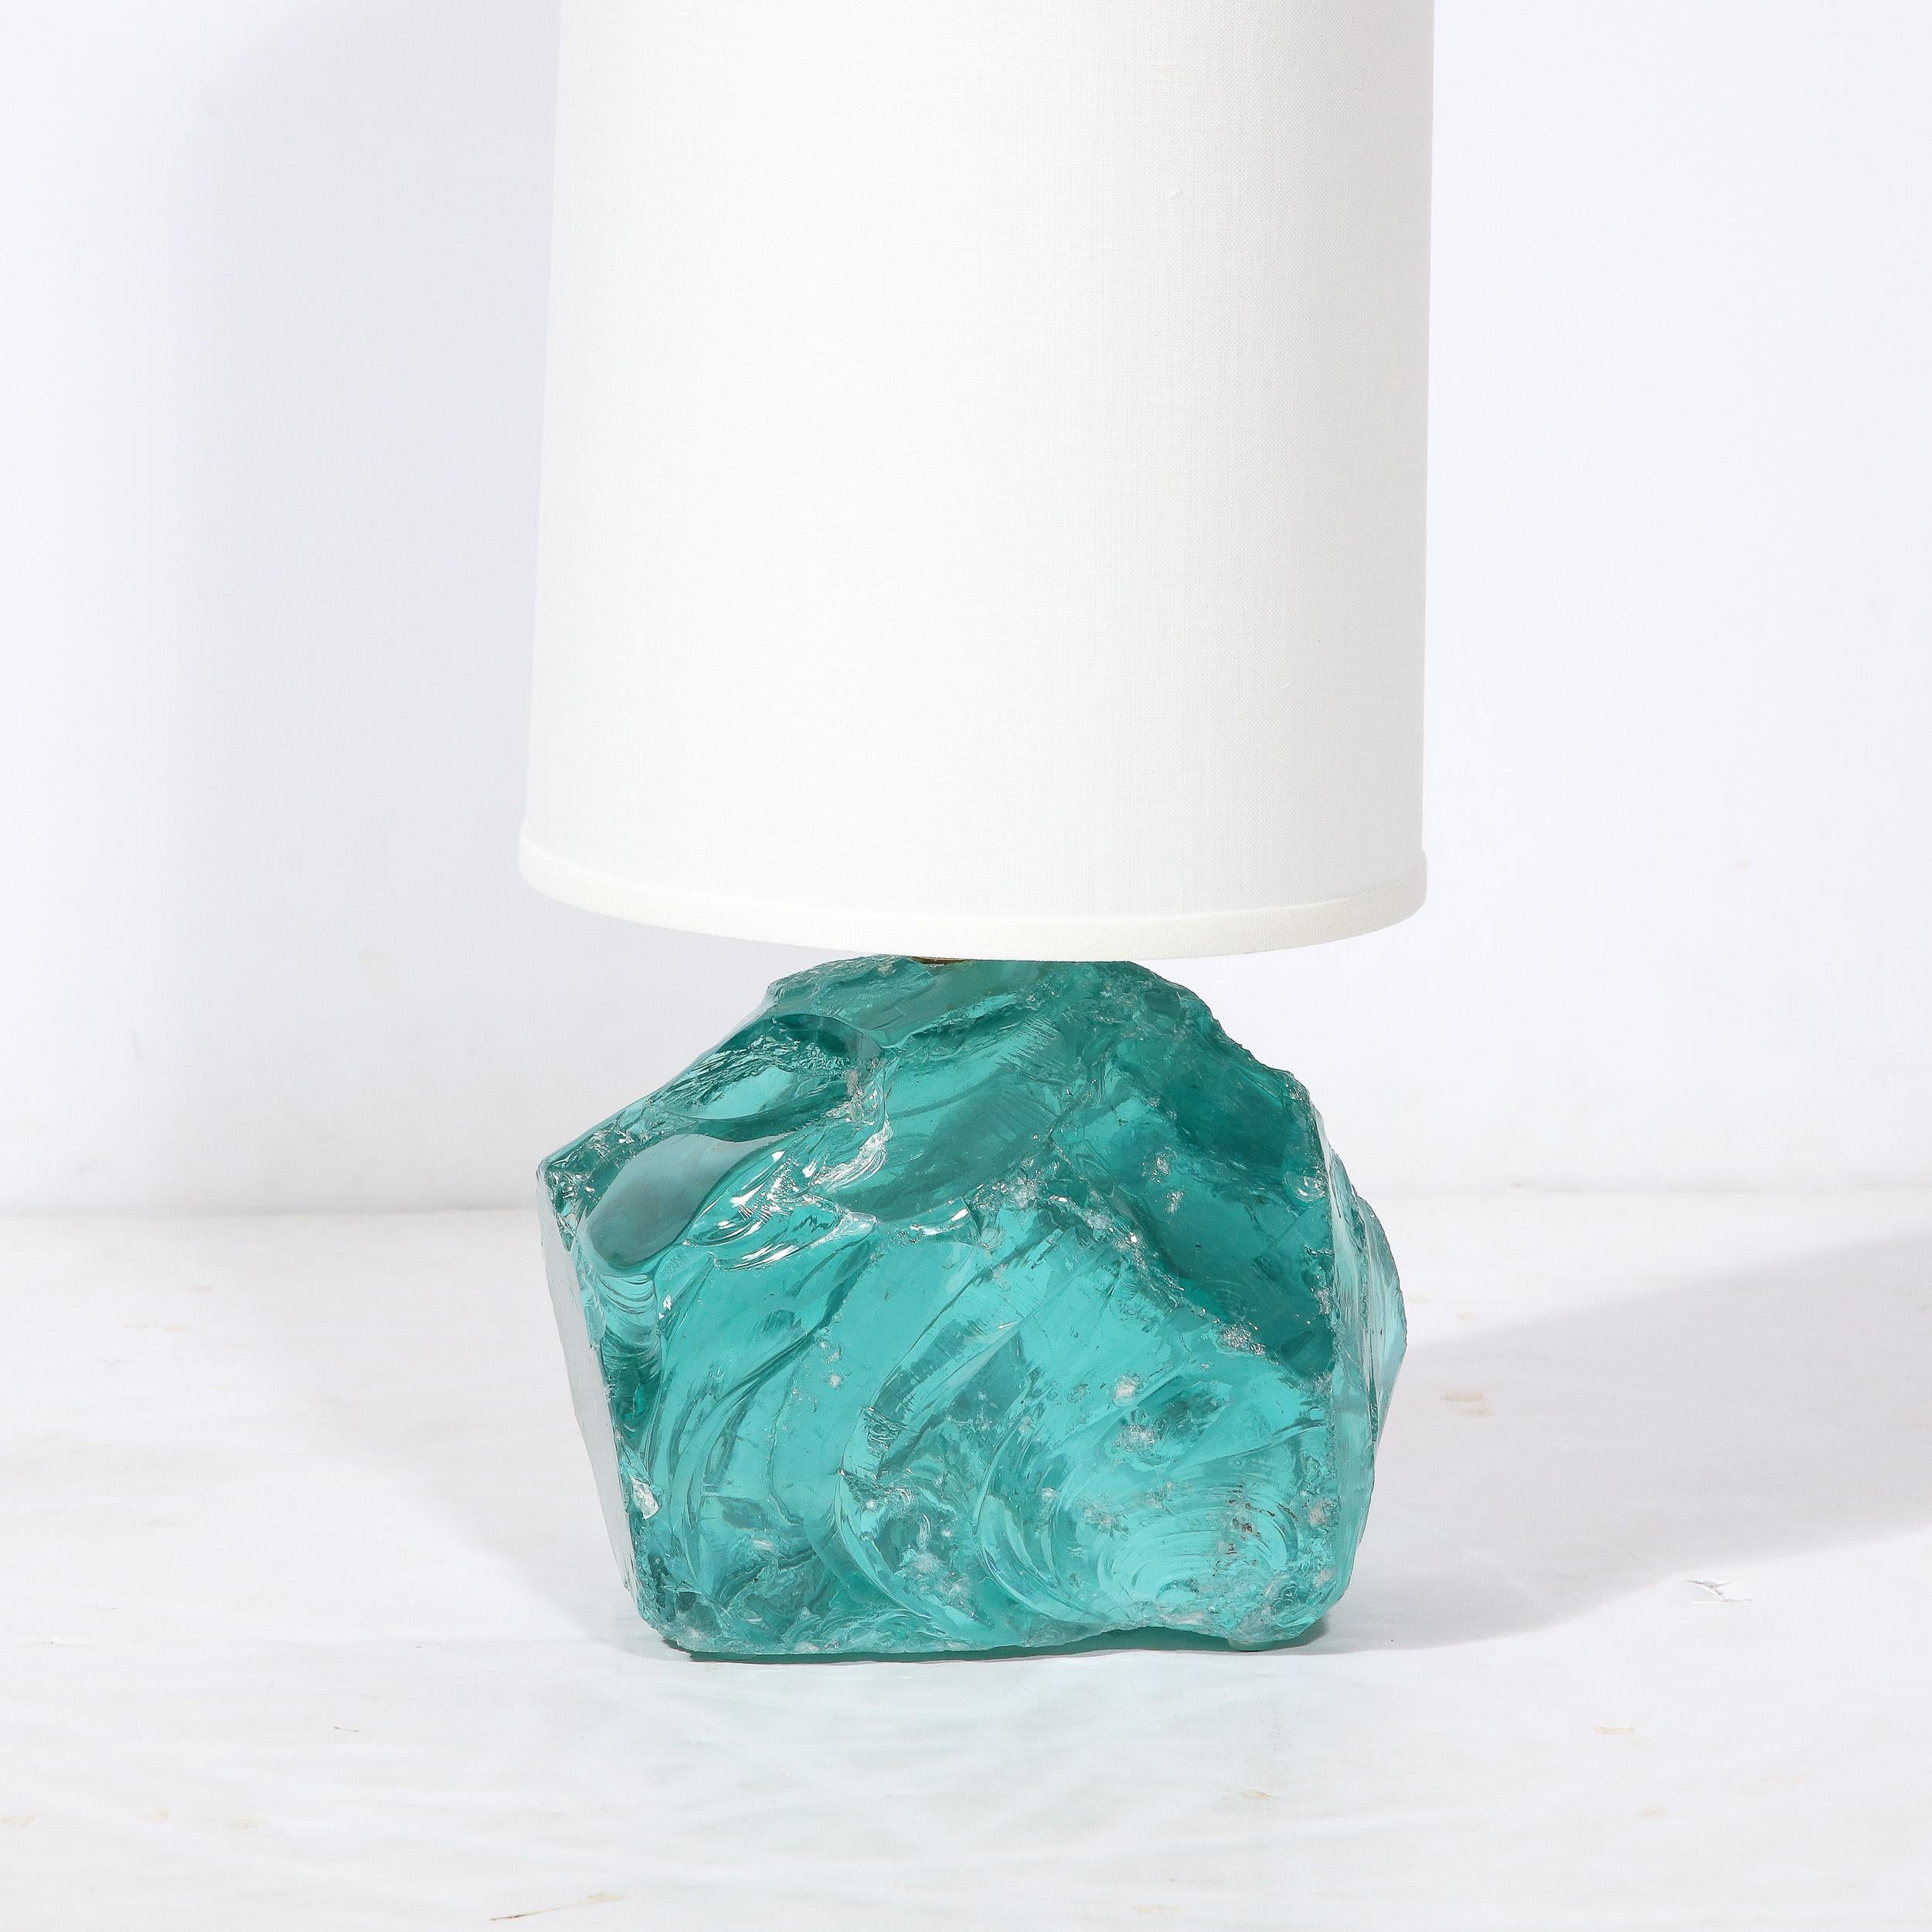 Italian Pair of Modernist Hand-Cut Aquamarine Murano Glass Table Lamps